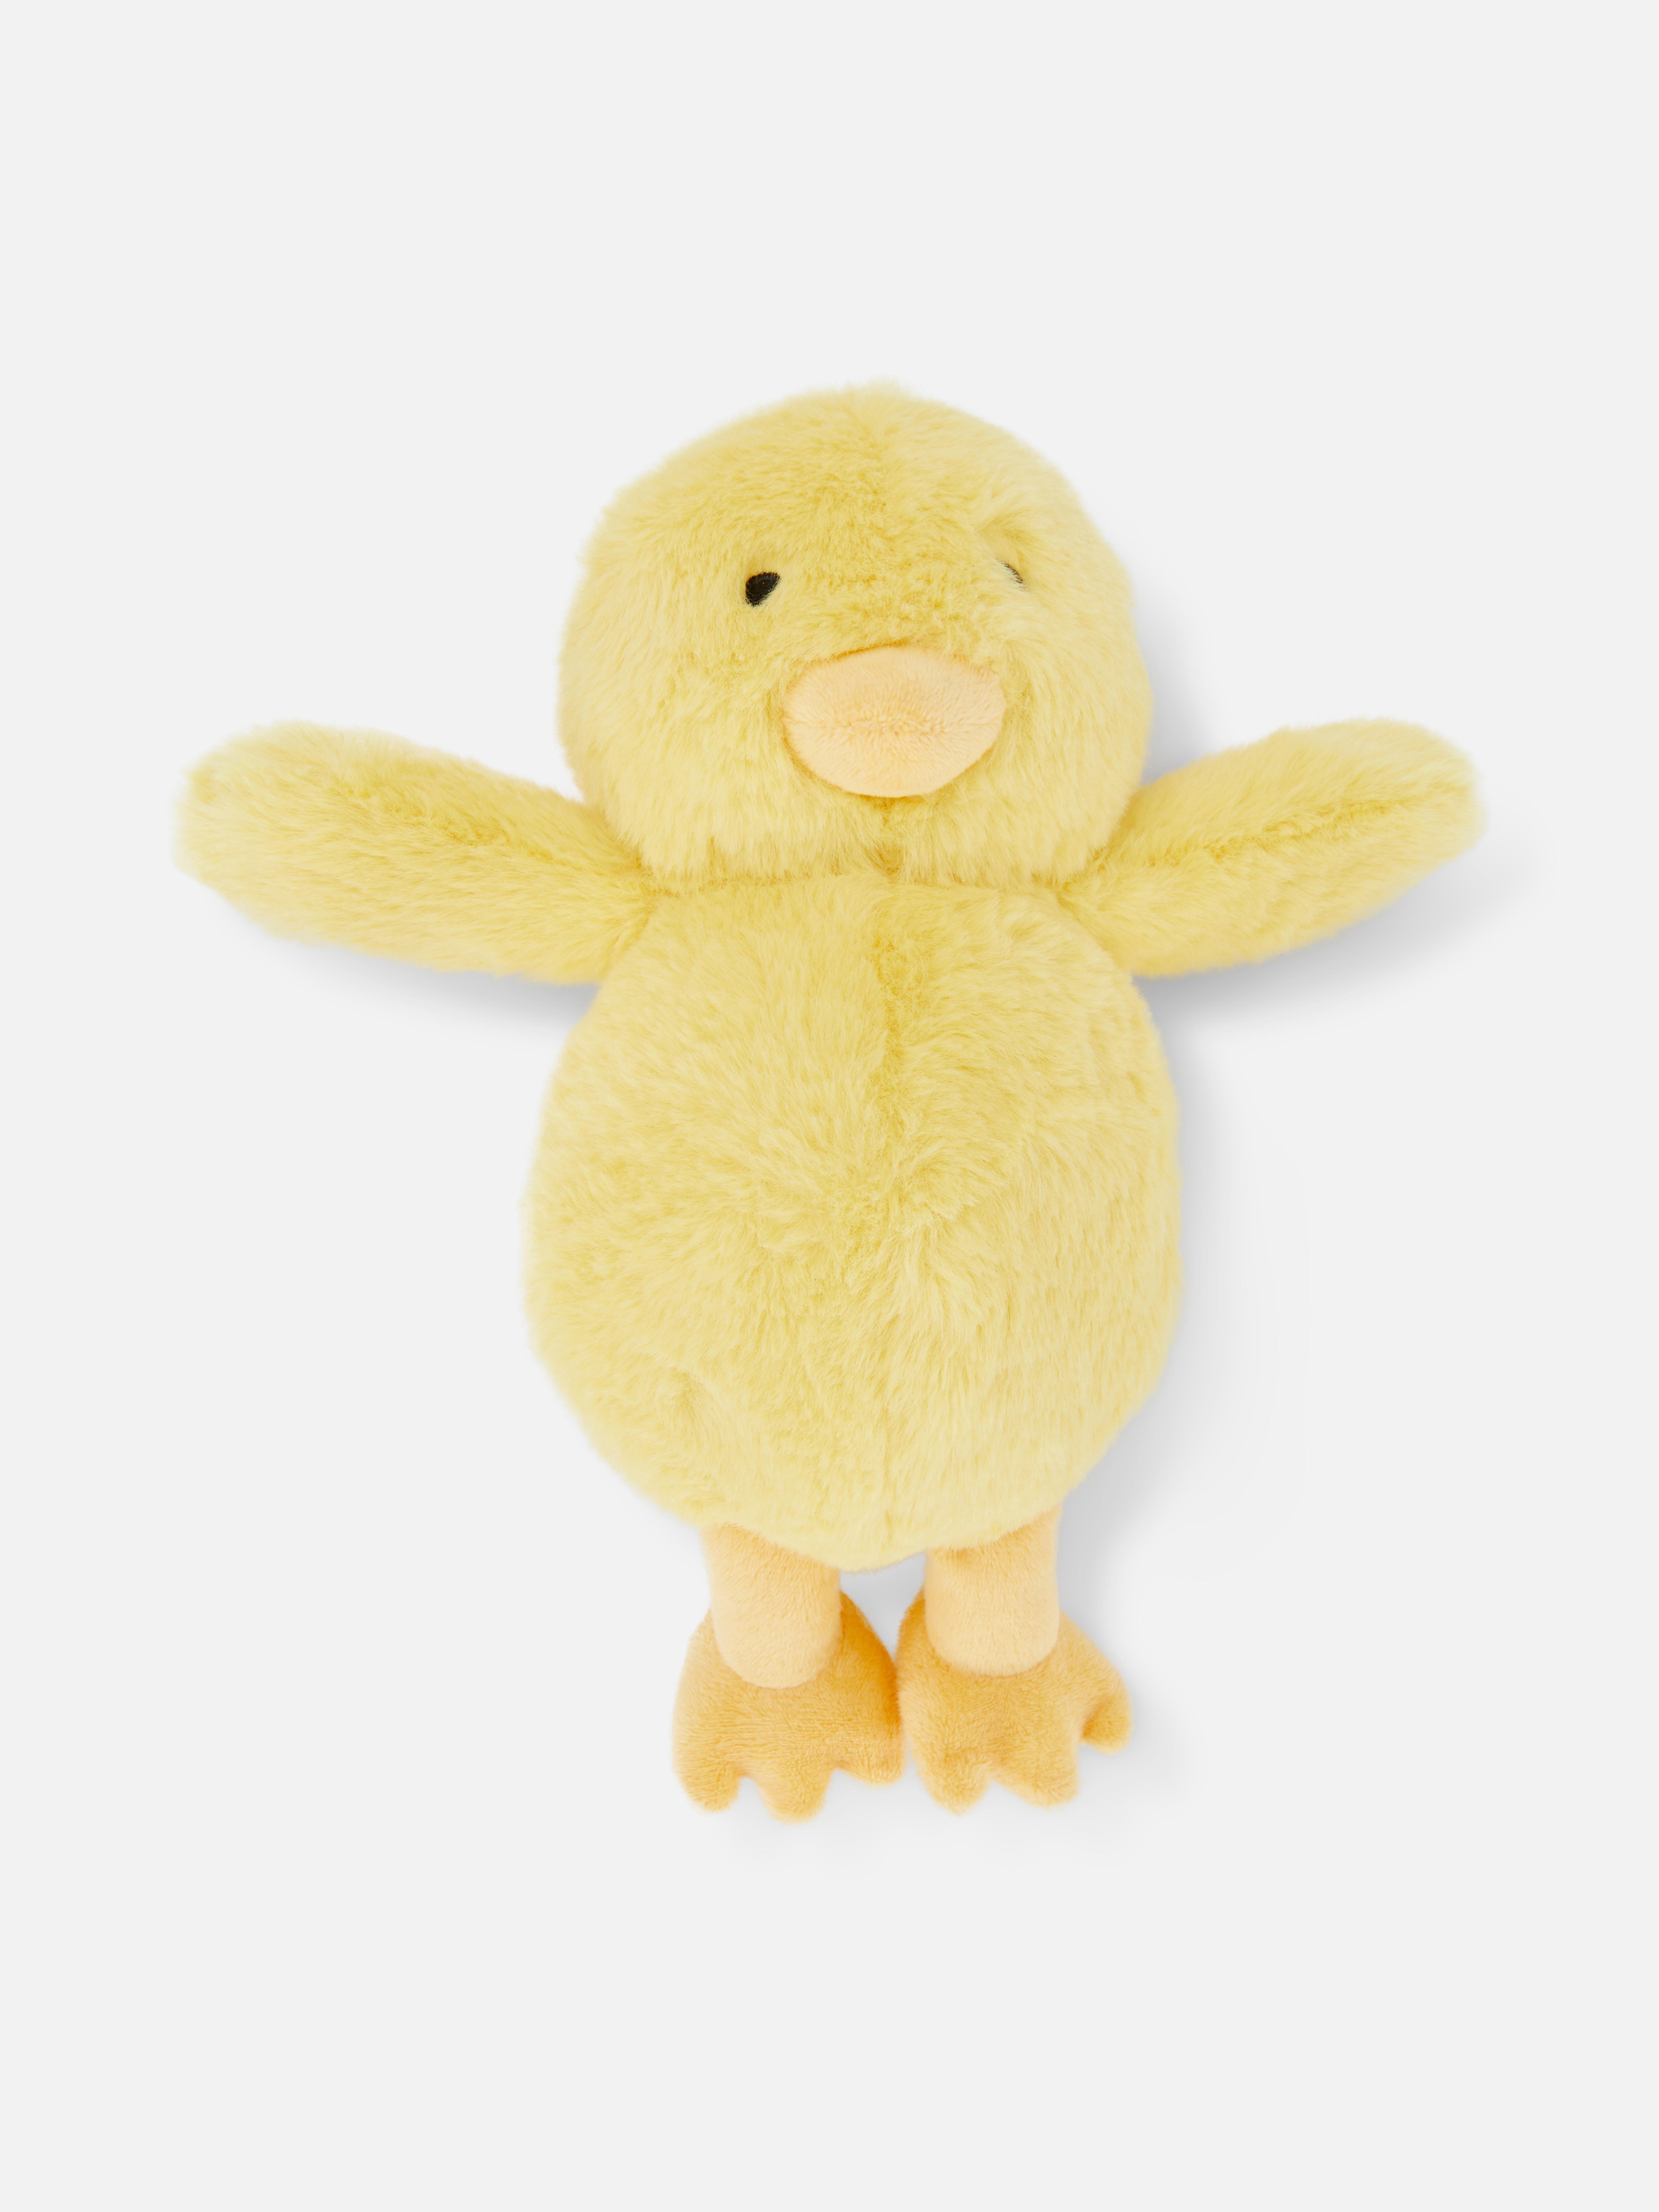 Fluffy Baby Chick Plush Toy